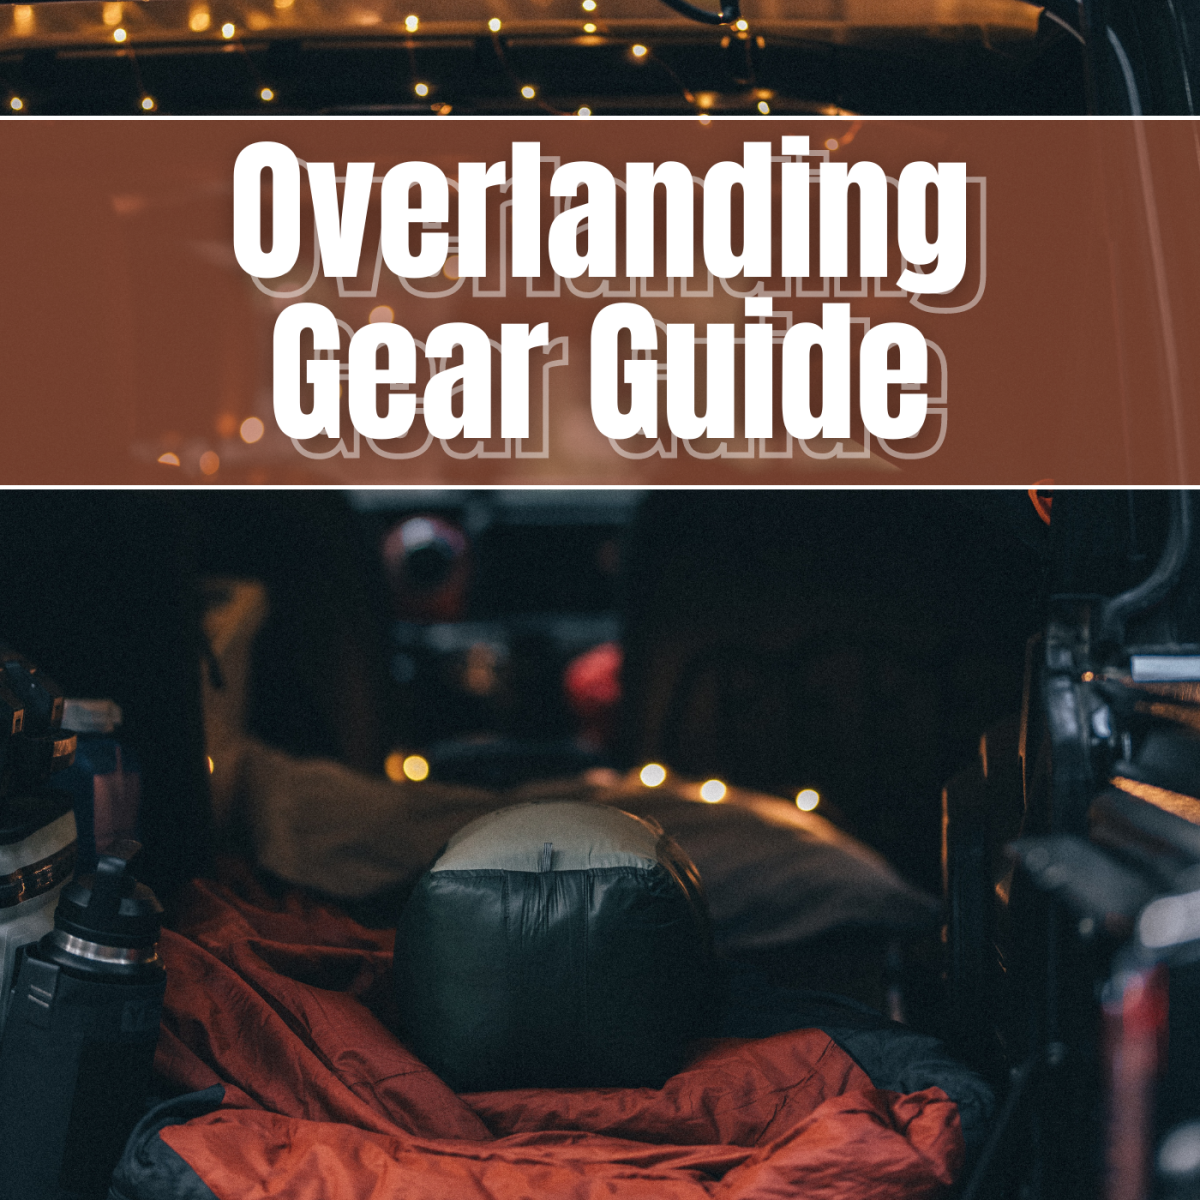 Overlanding gear guide